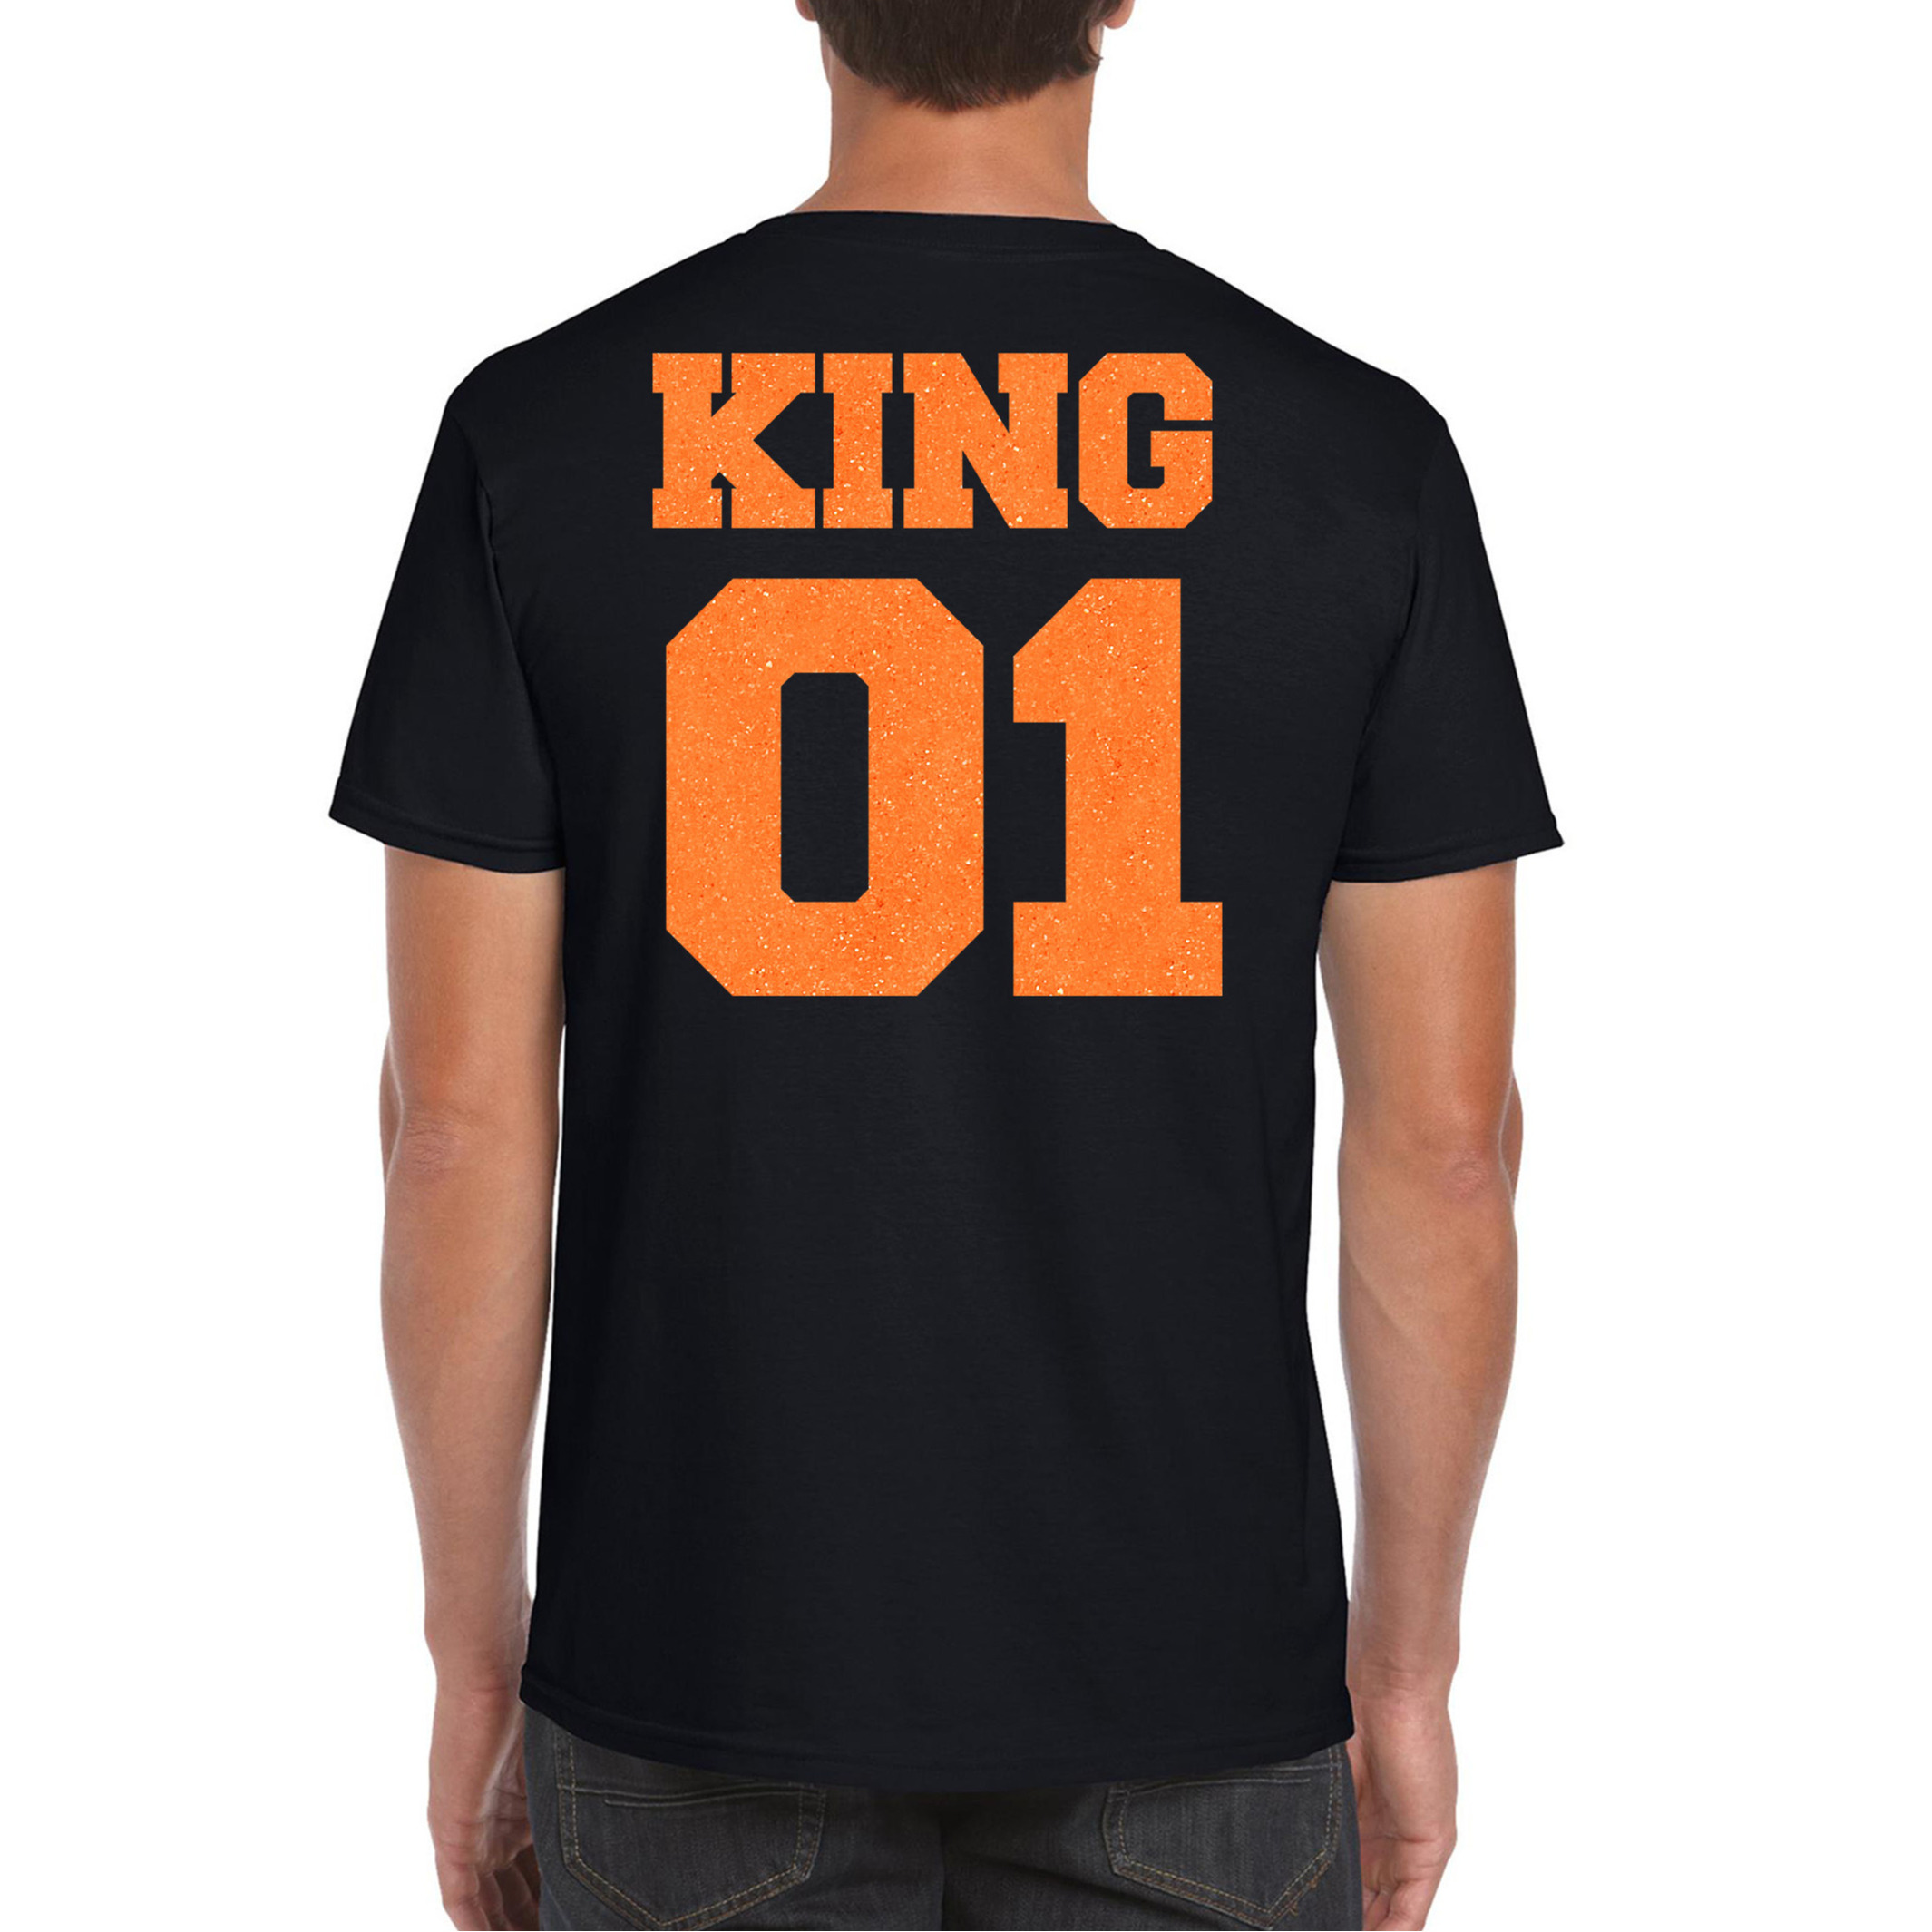 Koningsdag verkleed T-shirt voor heren King zwart met glitters feestkleding